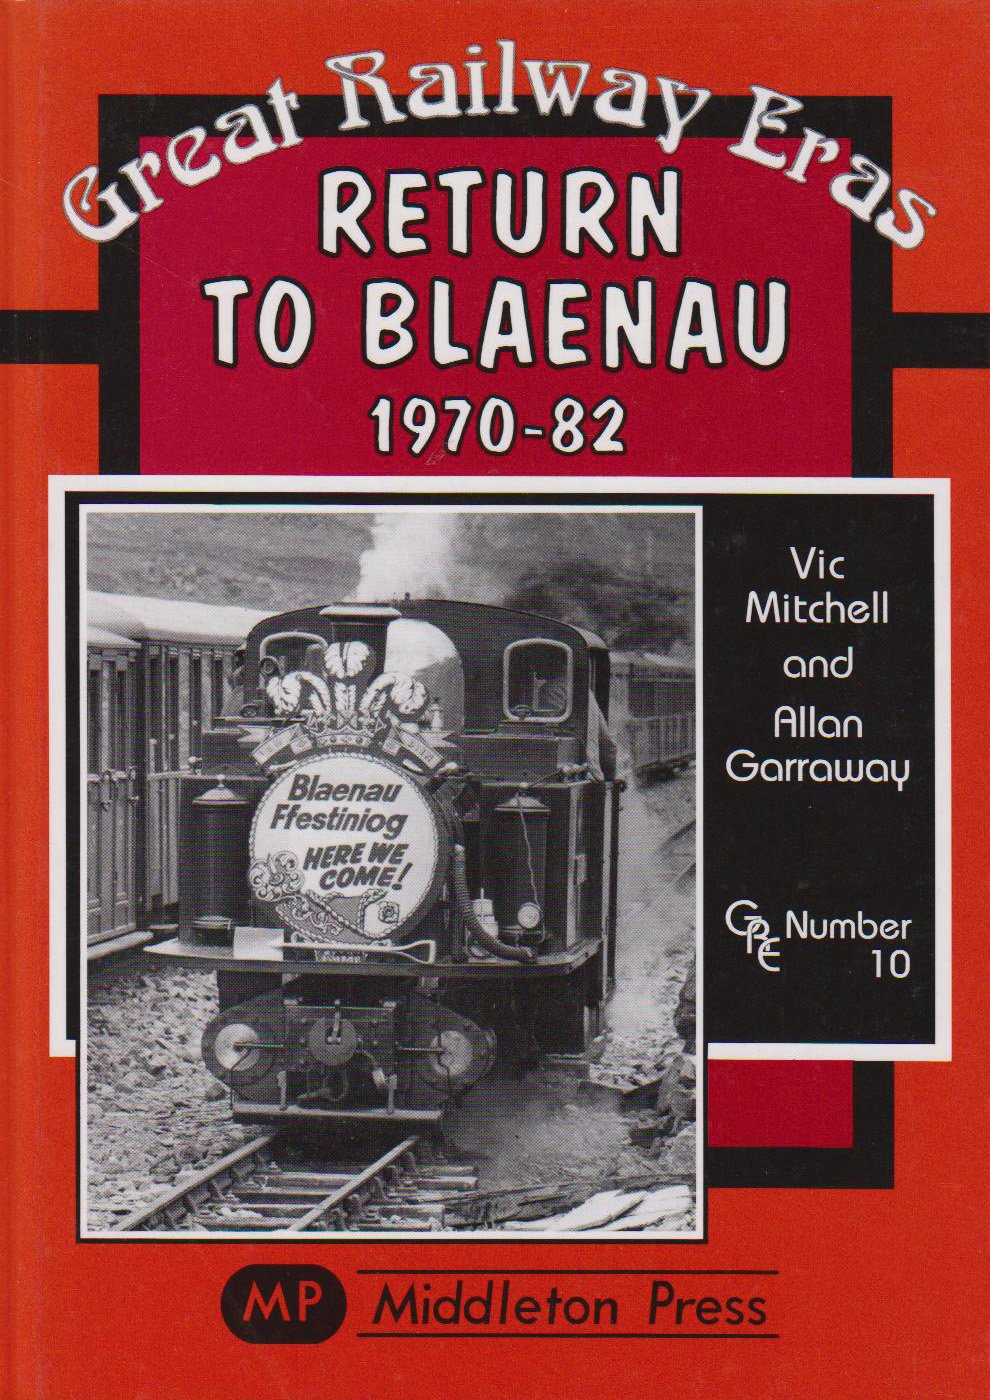 Great Railway Eras Return to Blaenau 1970 - 82